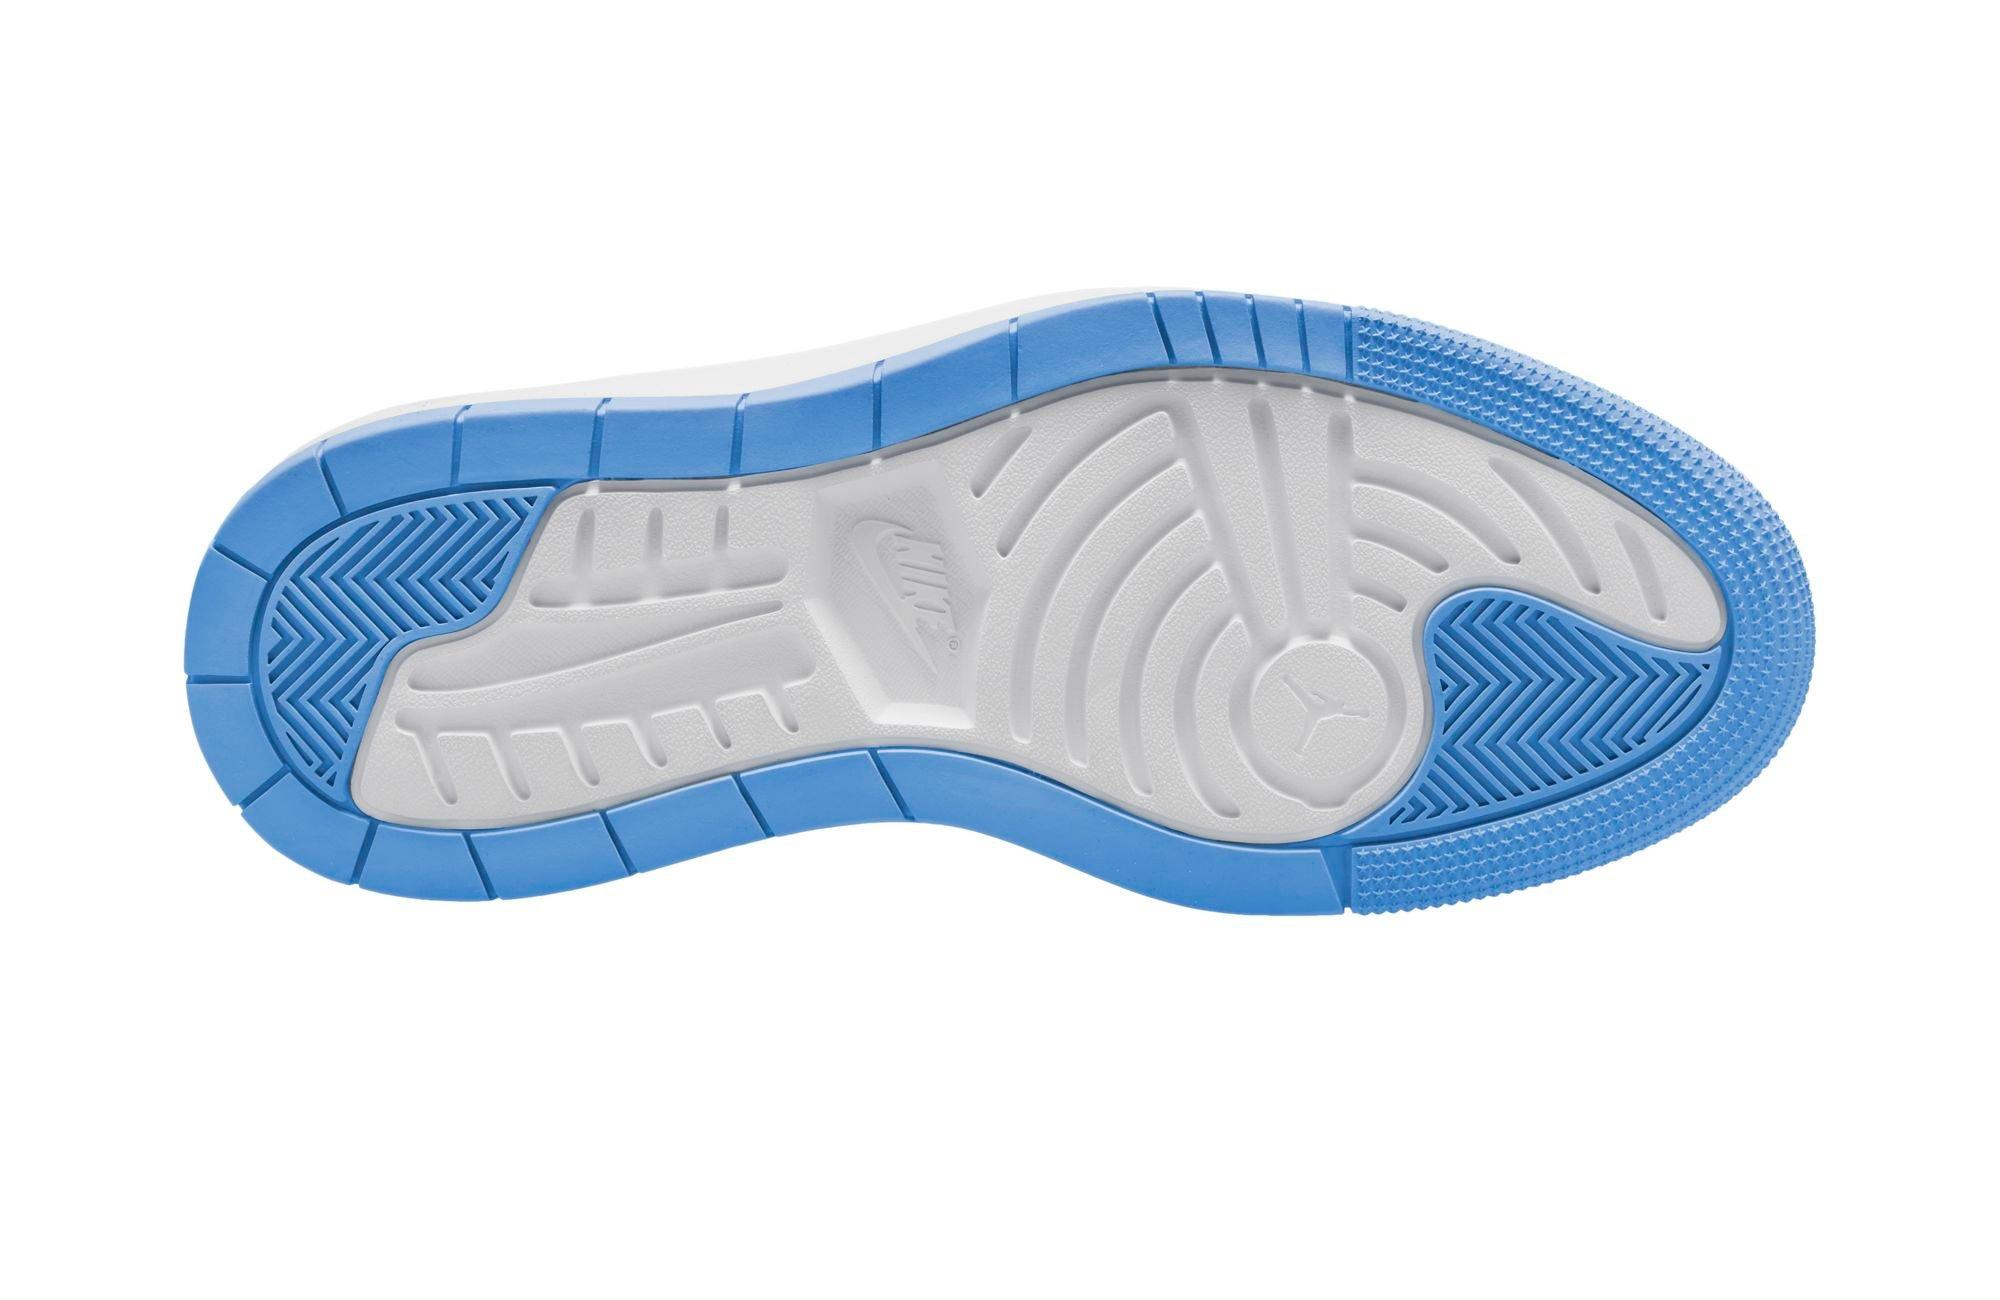 Sneakers Release – “University Blue” UNC